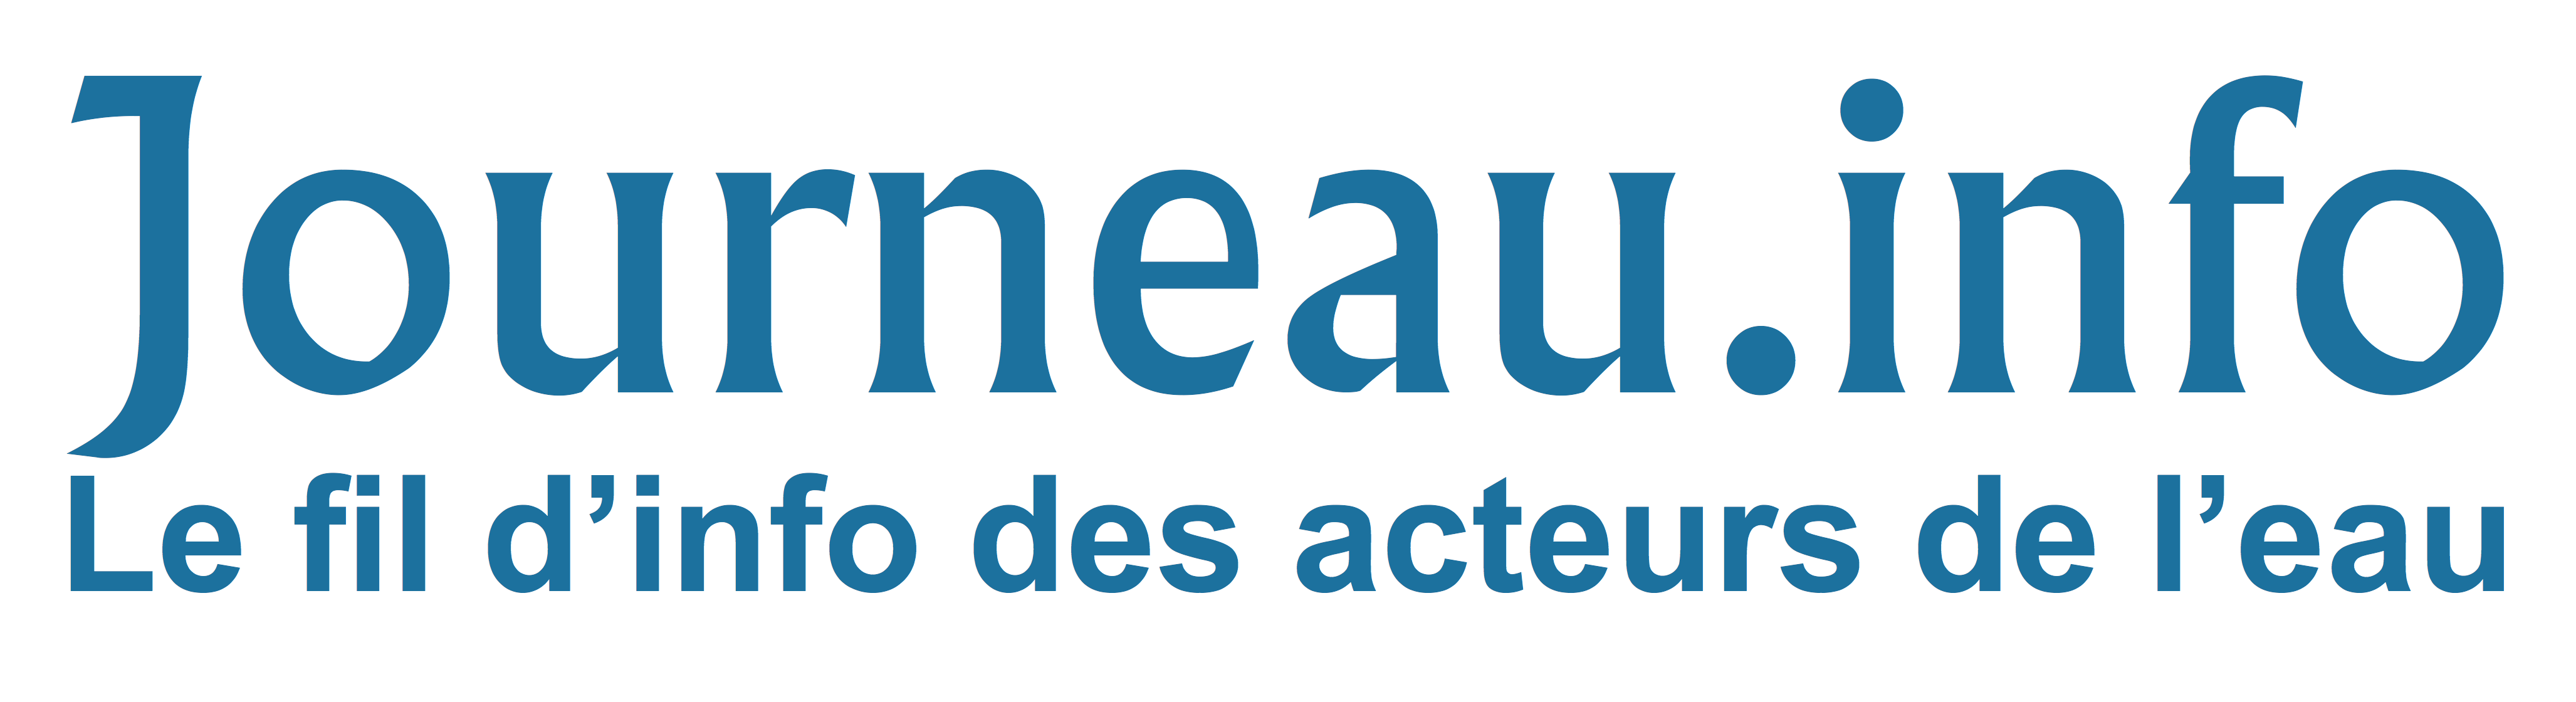 JOURNEAU logo